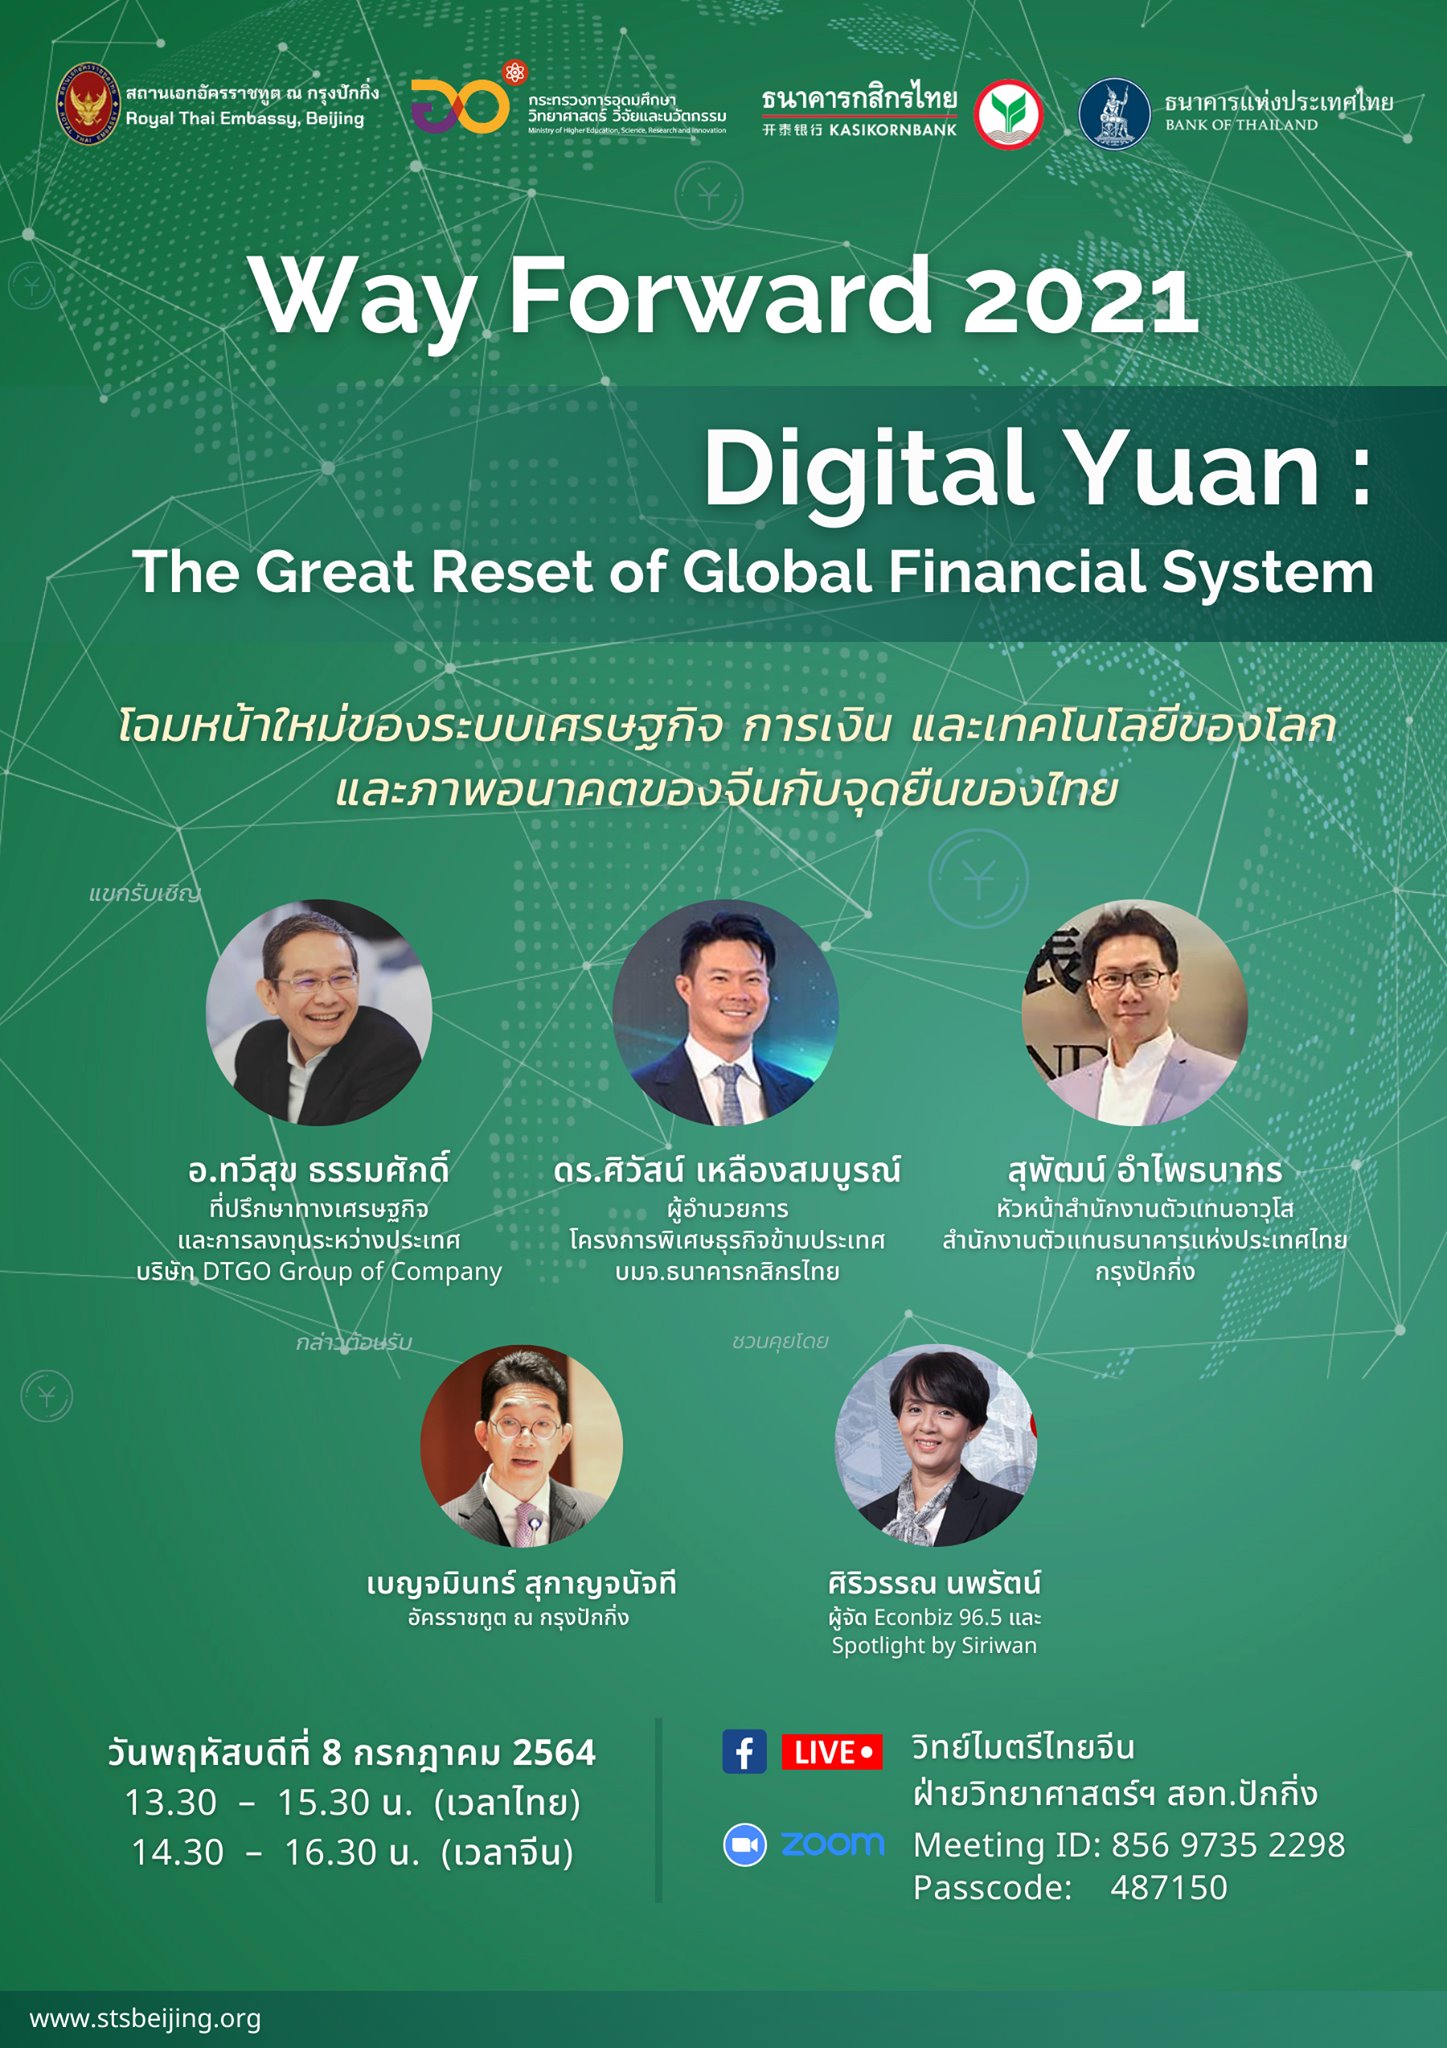 Way Forward 2021 ครั้งที่ 10 “Digital Yuan: The Great Reset of Global Financial System”